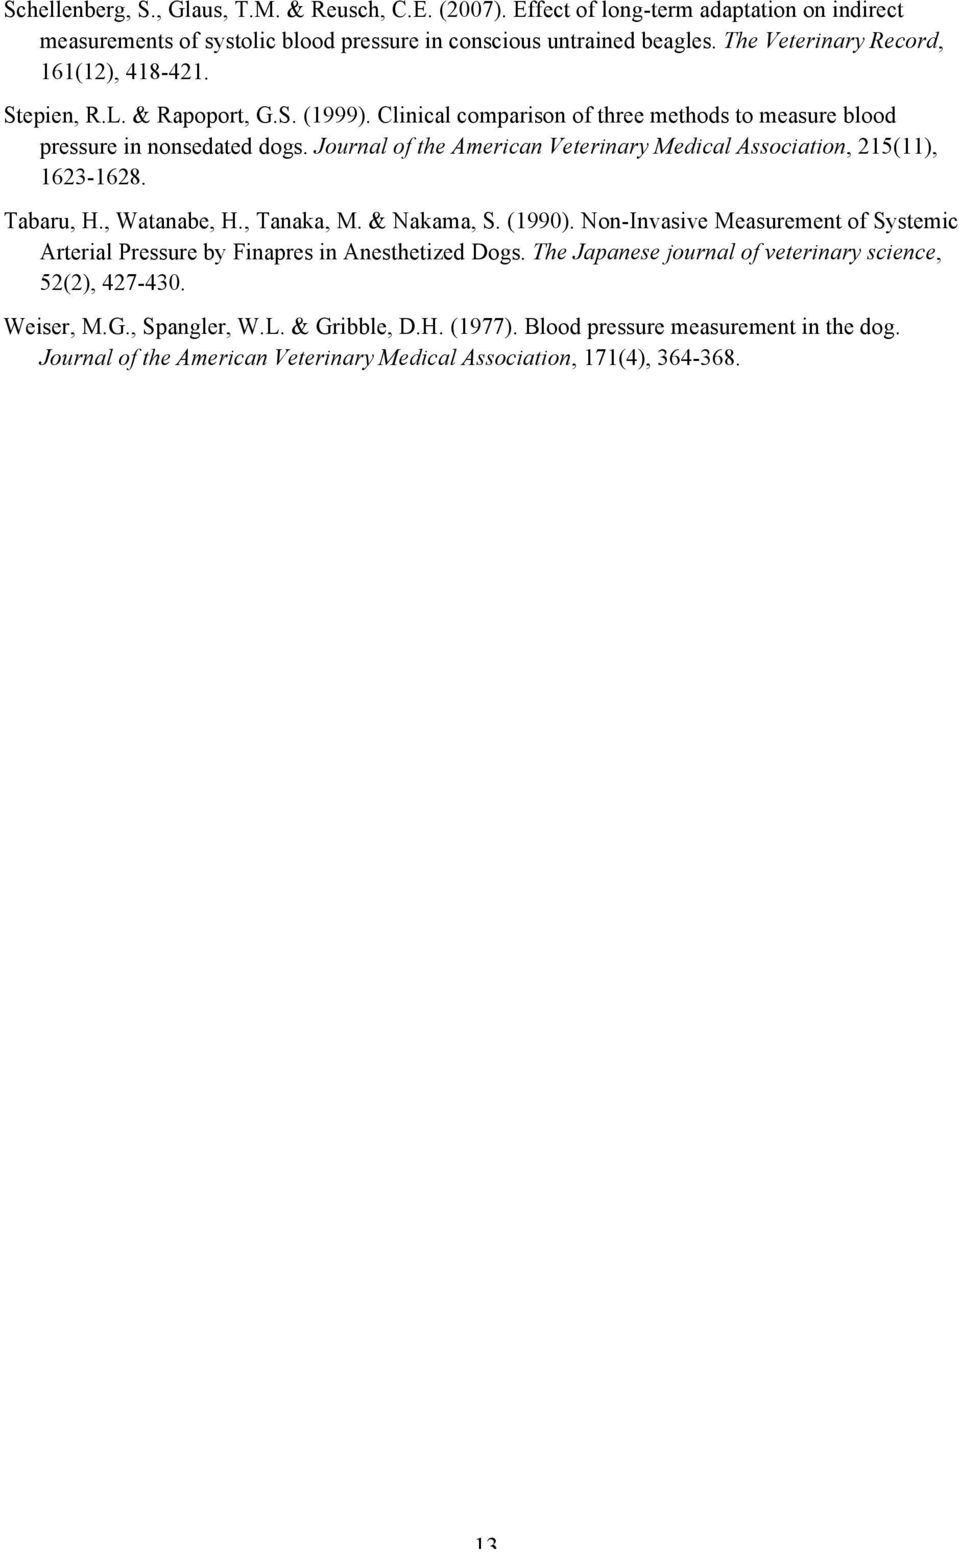 Journal of the American Veterinary Medical Association, 215(11), 1623-1628. Tabaru, H., Watanabe, H., Tanaka, M. & Nakama, S. (1990).